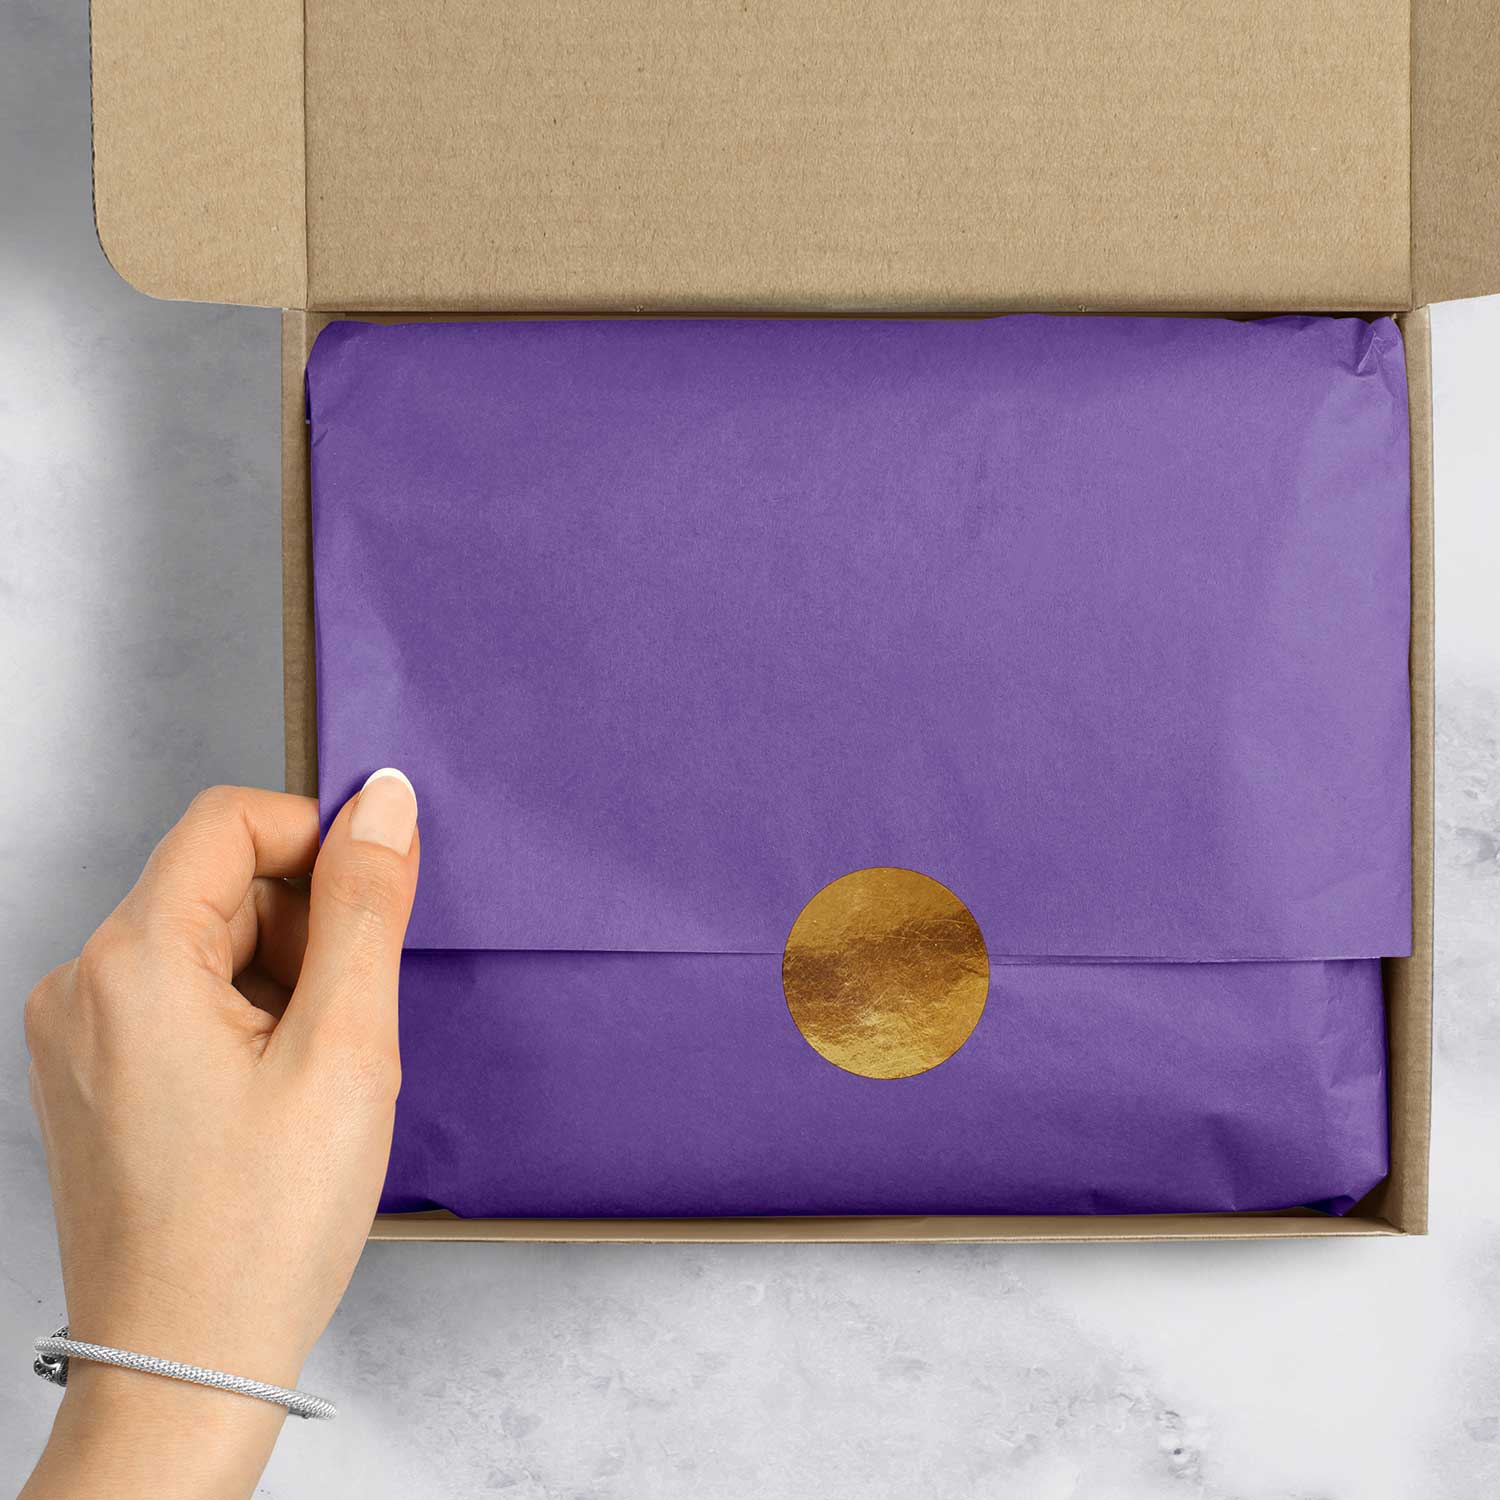 Jillson & Roberts Gift Tissue 20 inch x 30 inch, Purple (480 Sheets)